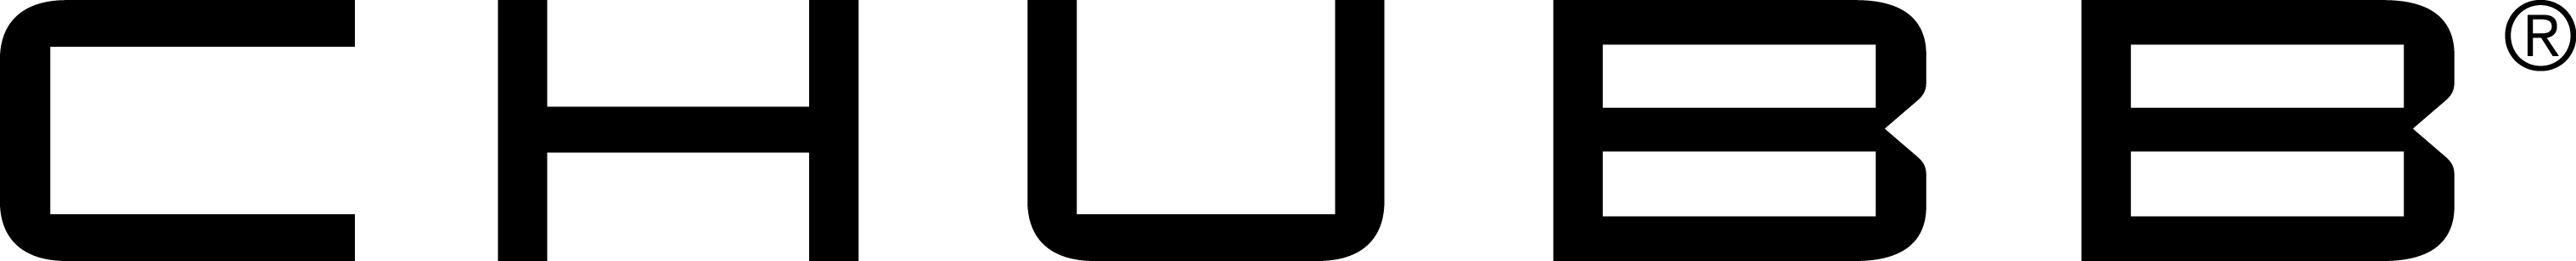 CHUBB Logo Black RBG